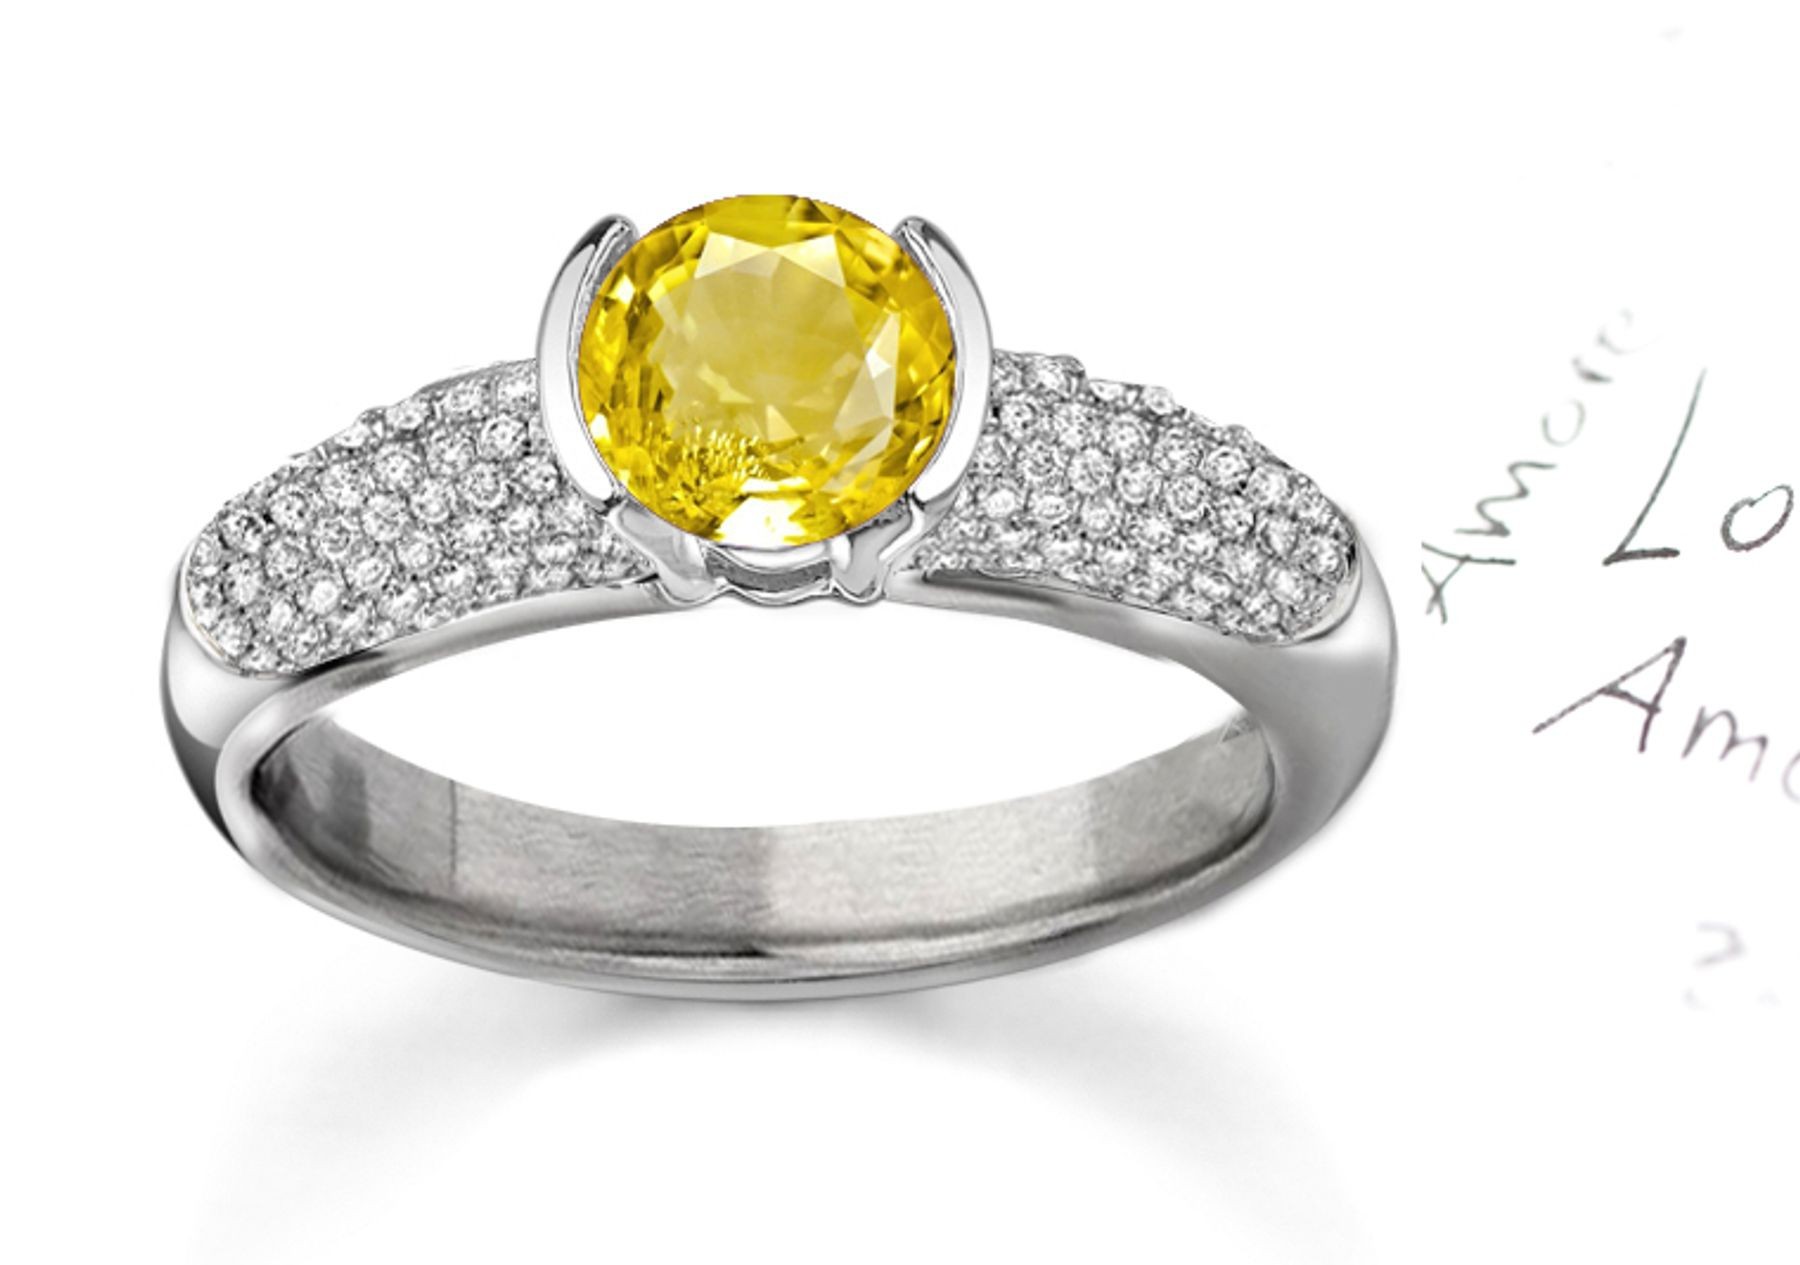 Art of the Jewel: Yellow Sapphire & Diamond Pave Ring